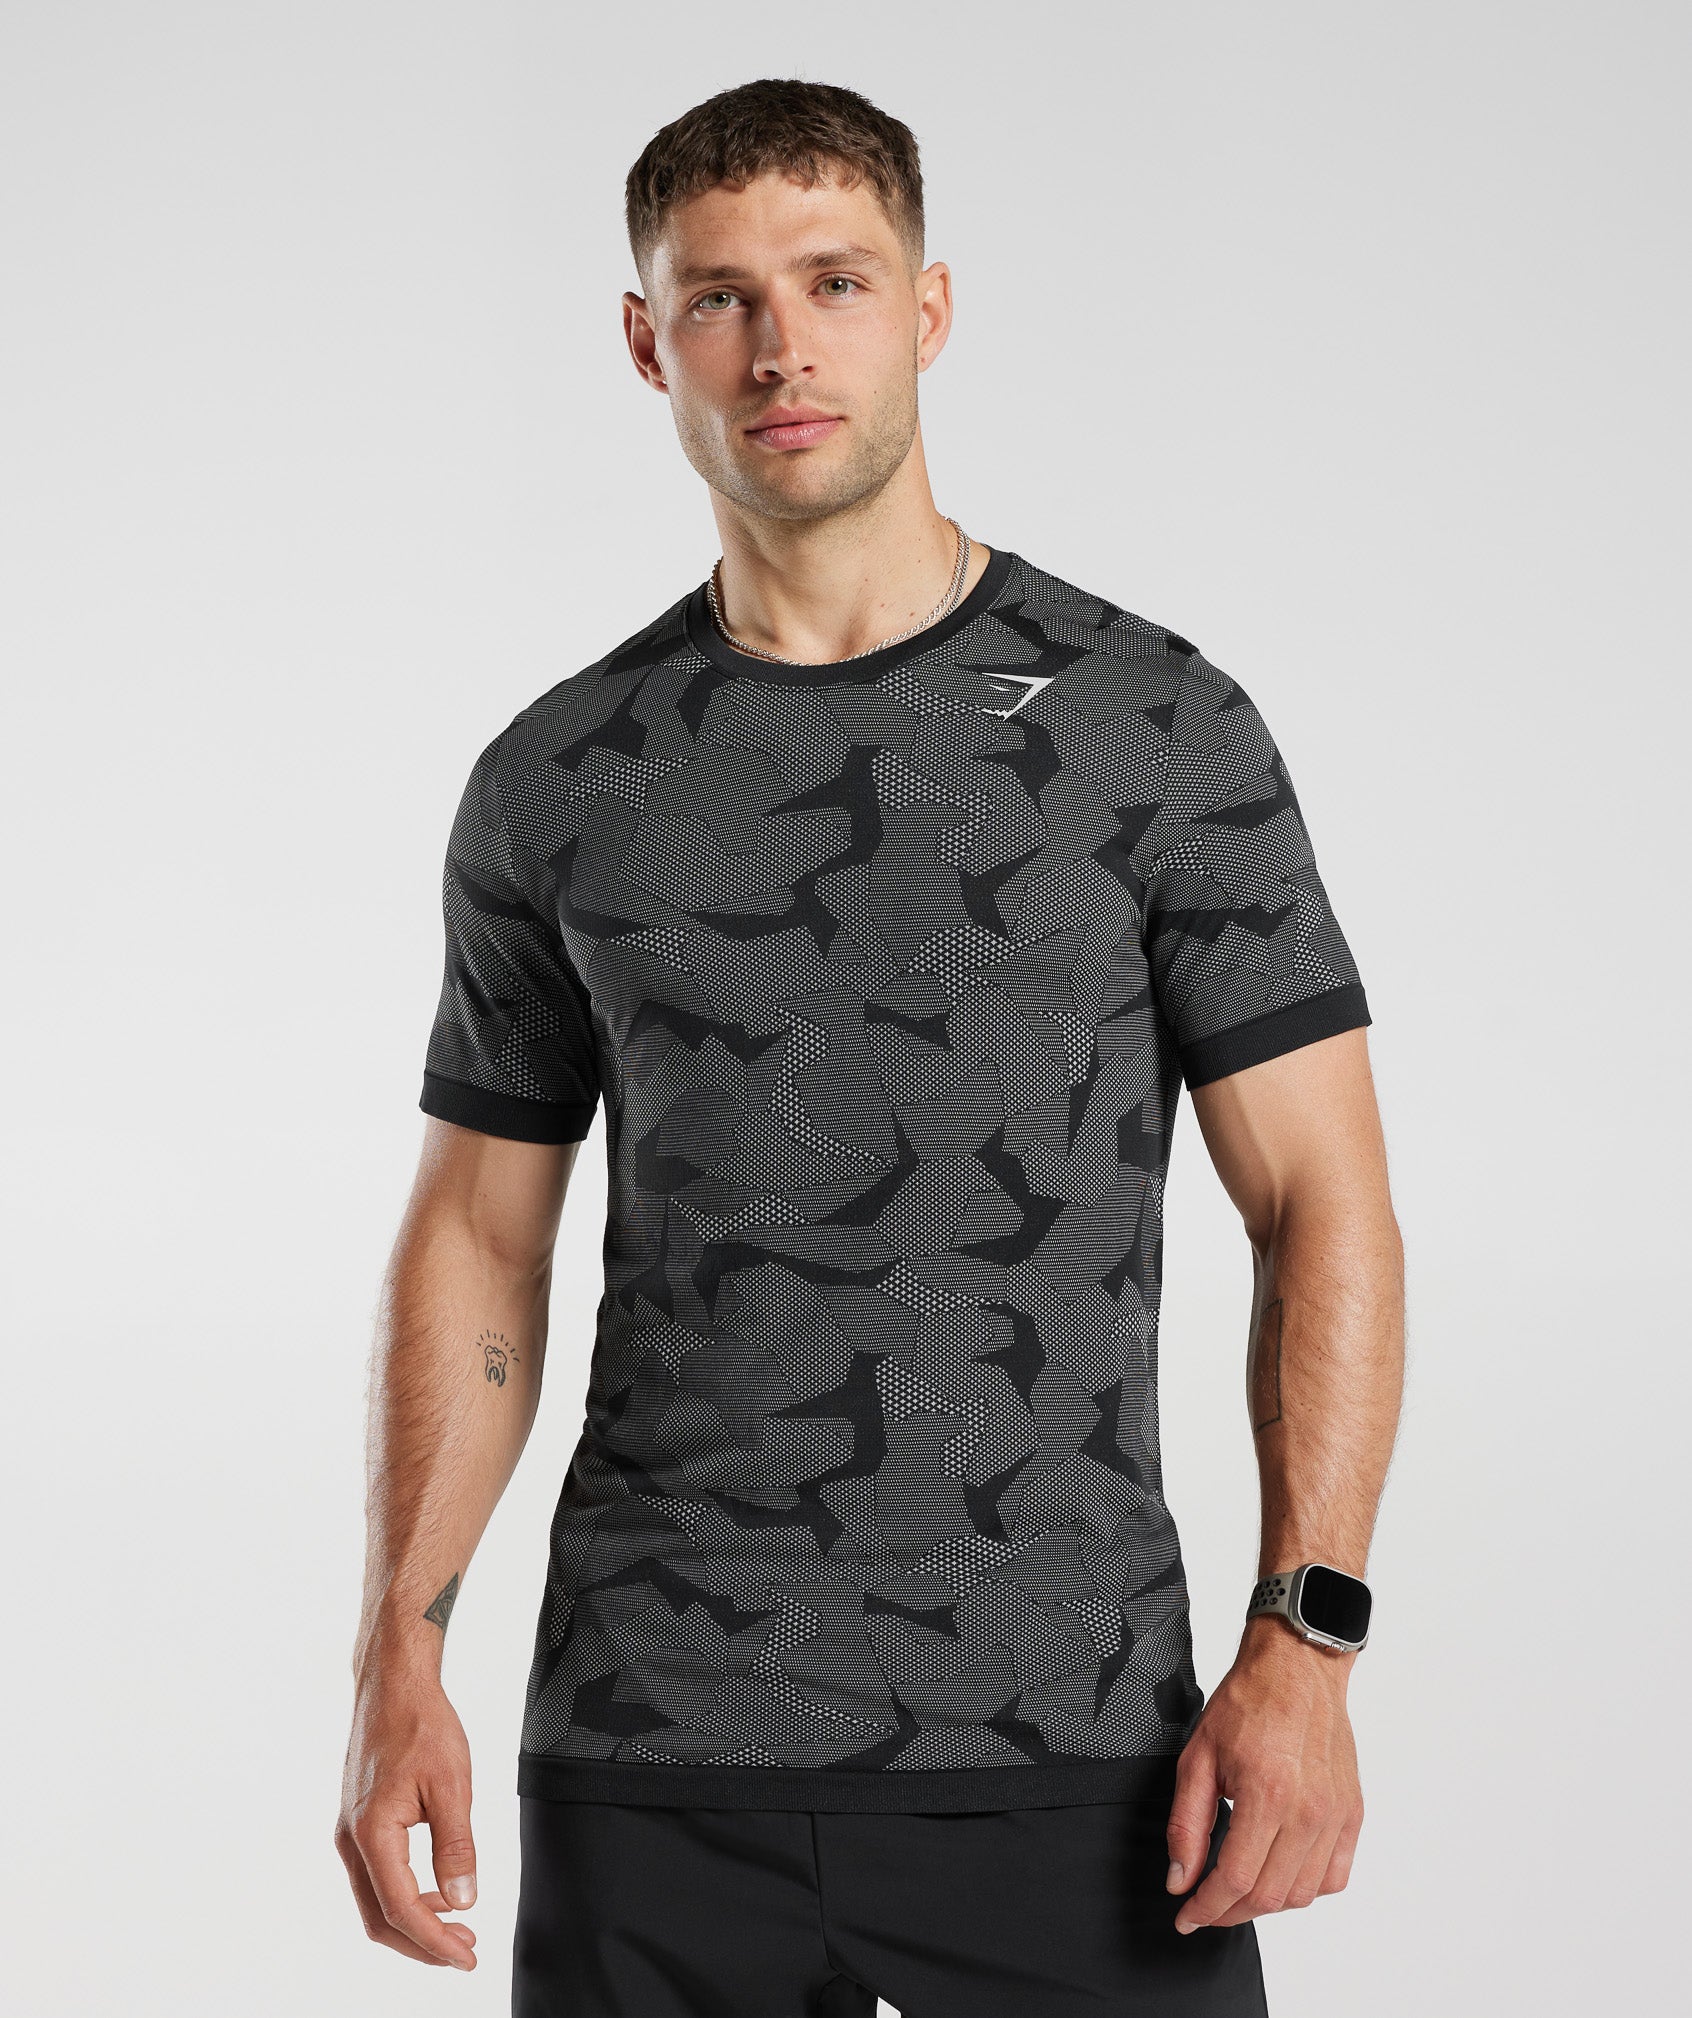 Gymshark Geo Seamless Long Sleeve T-Shirt - Charcoal Grey/Black